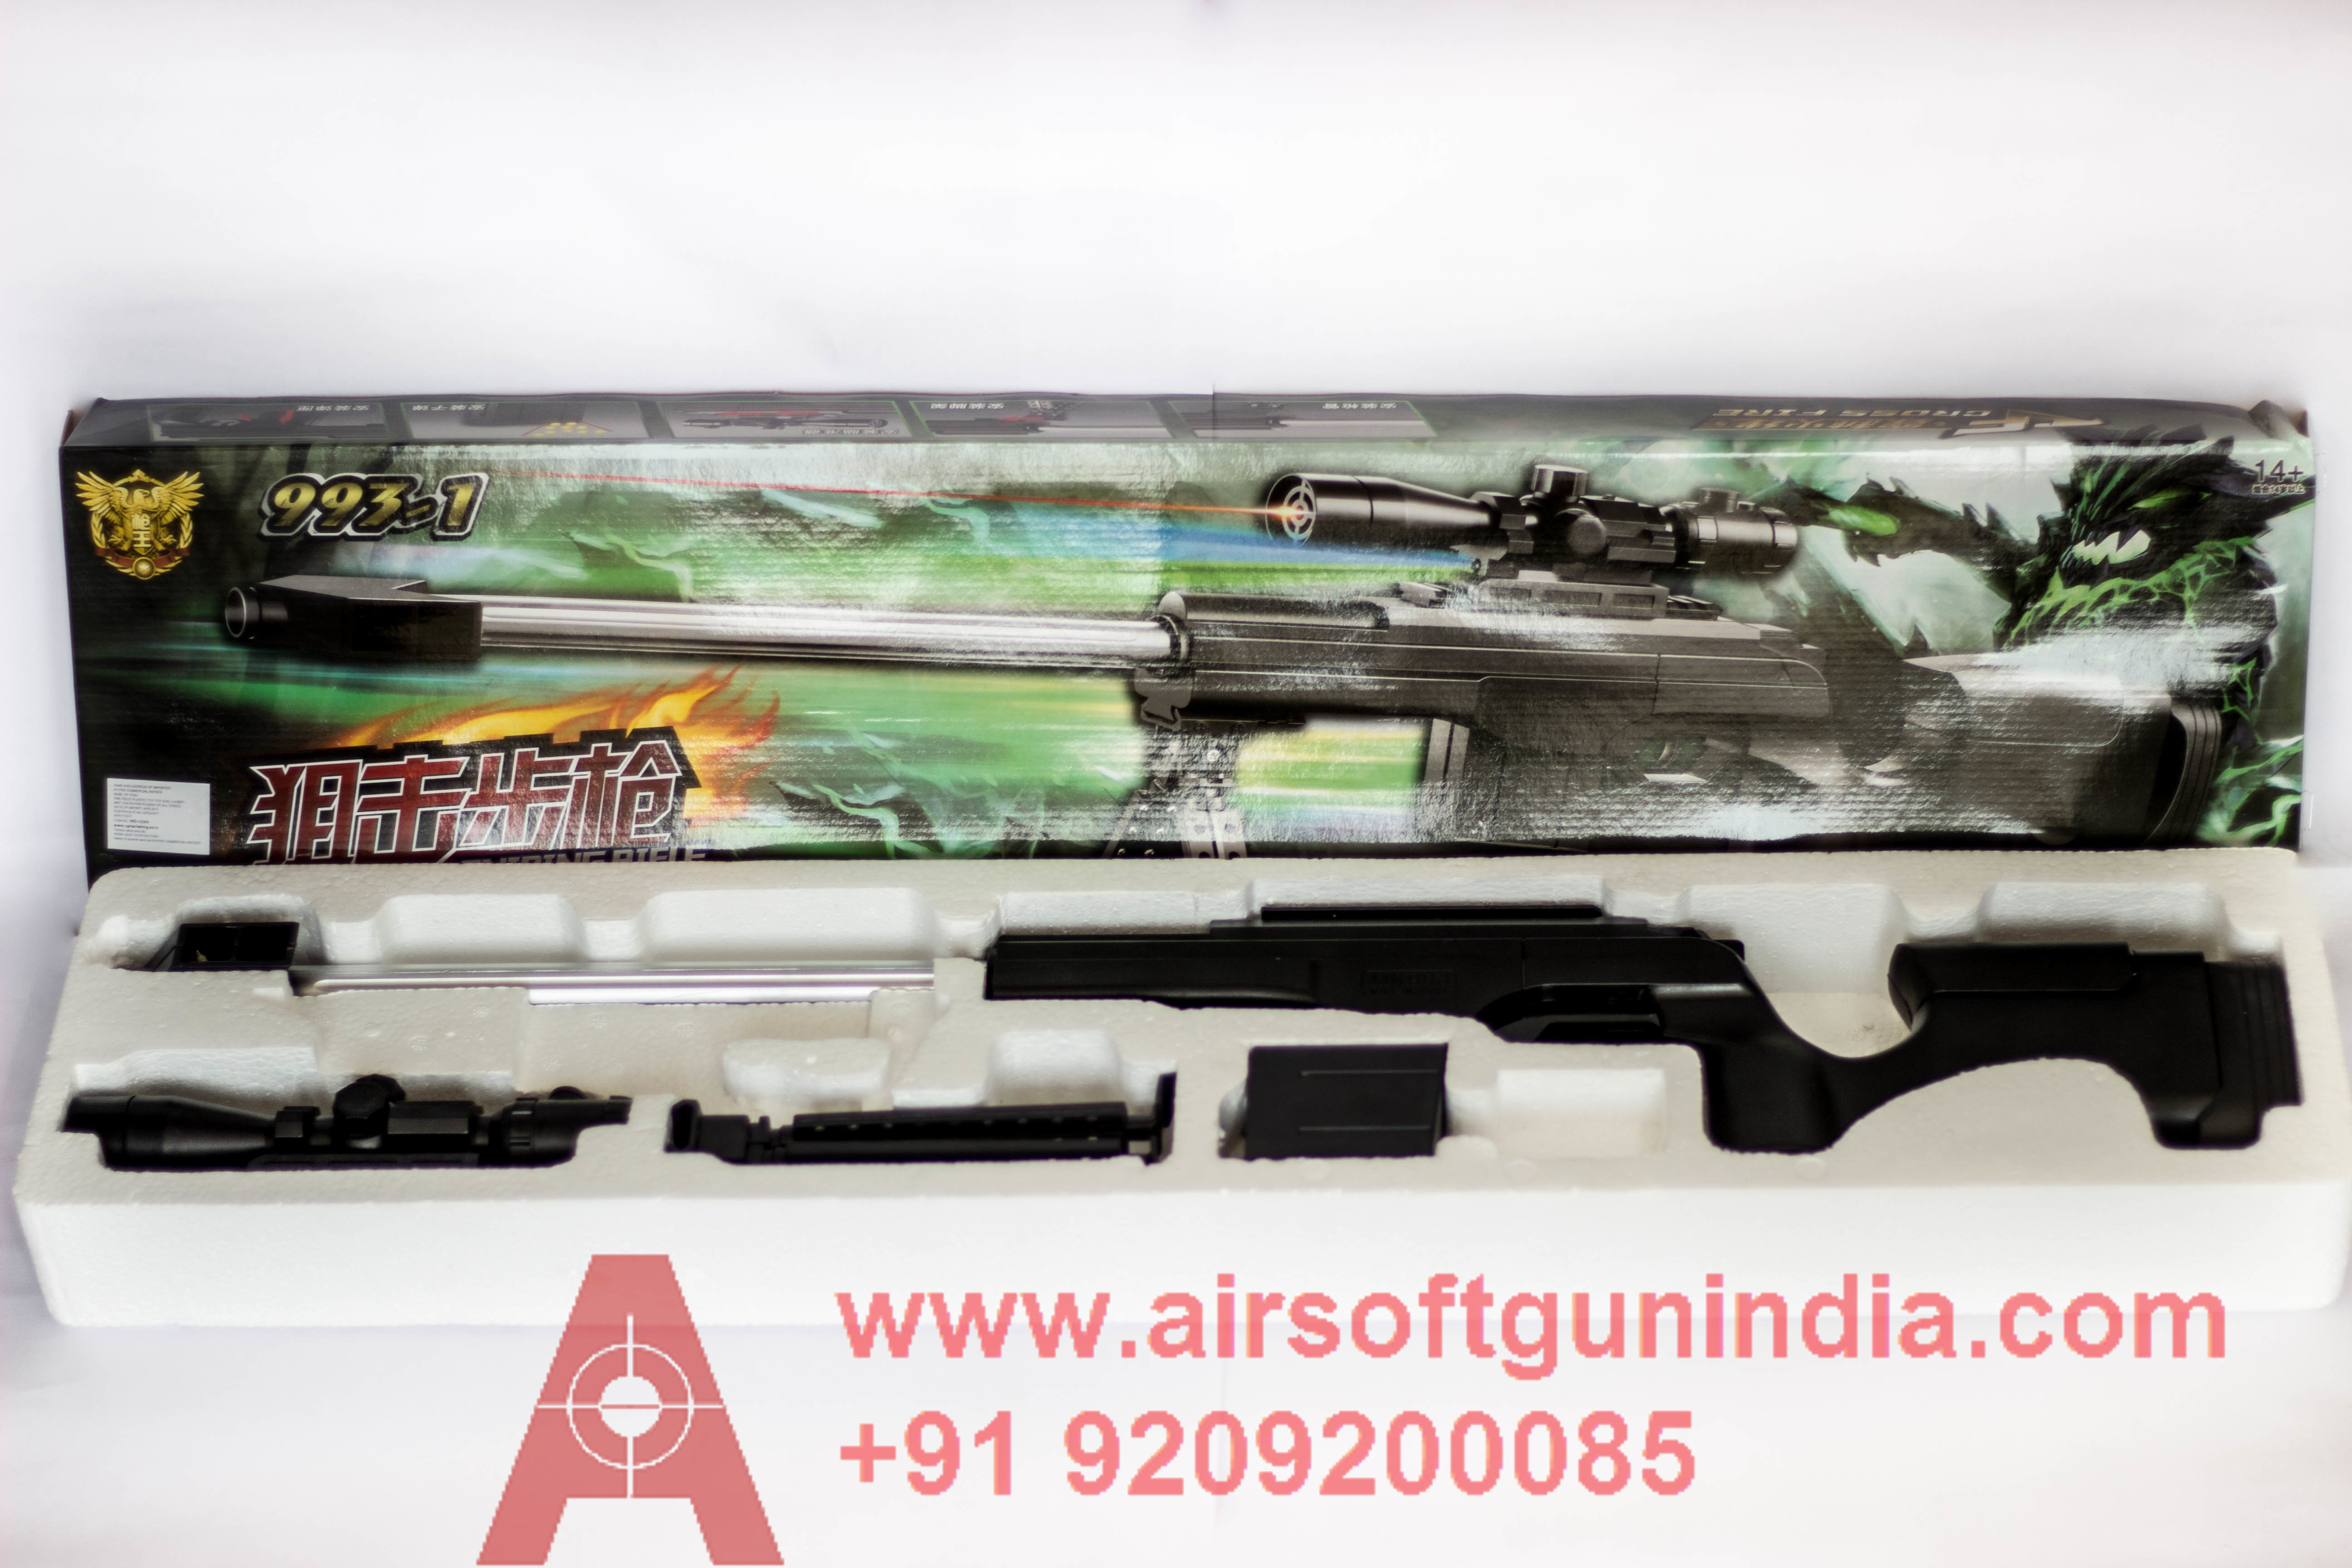 993-1 Sniper Rifle By Airsoft Gun India